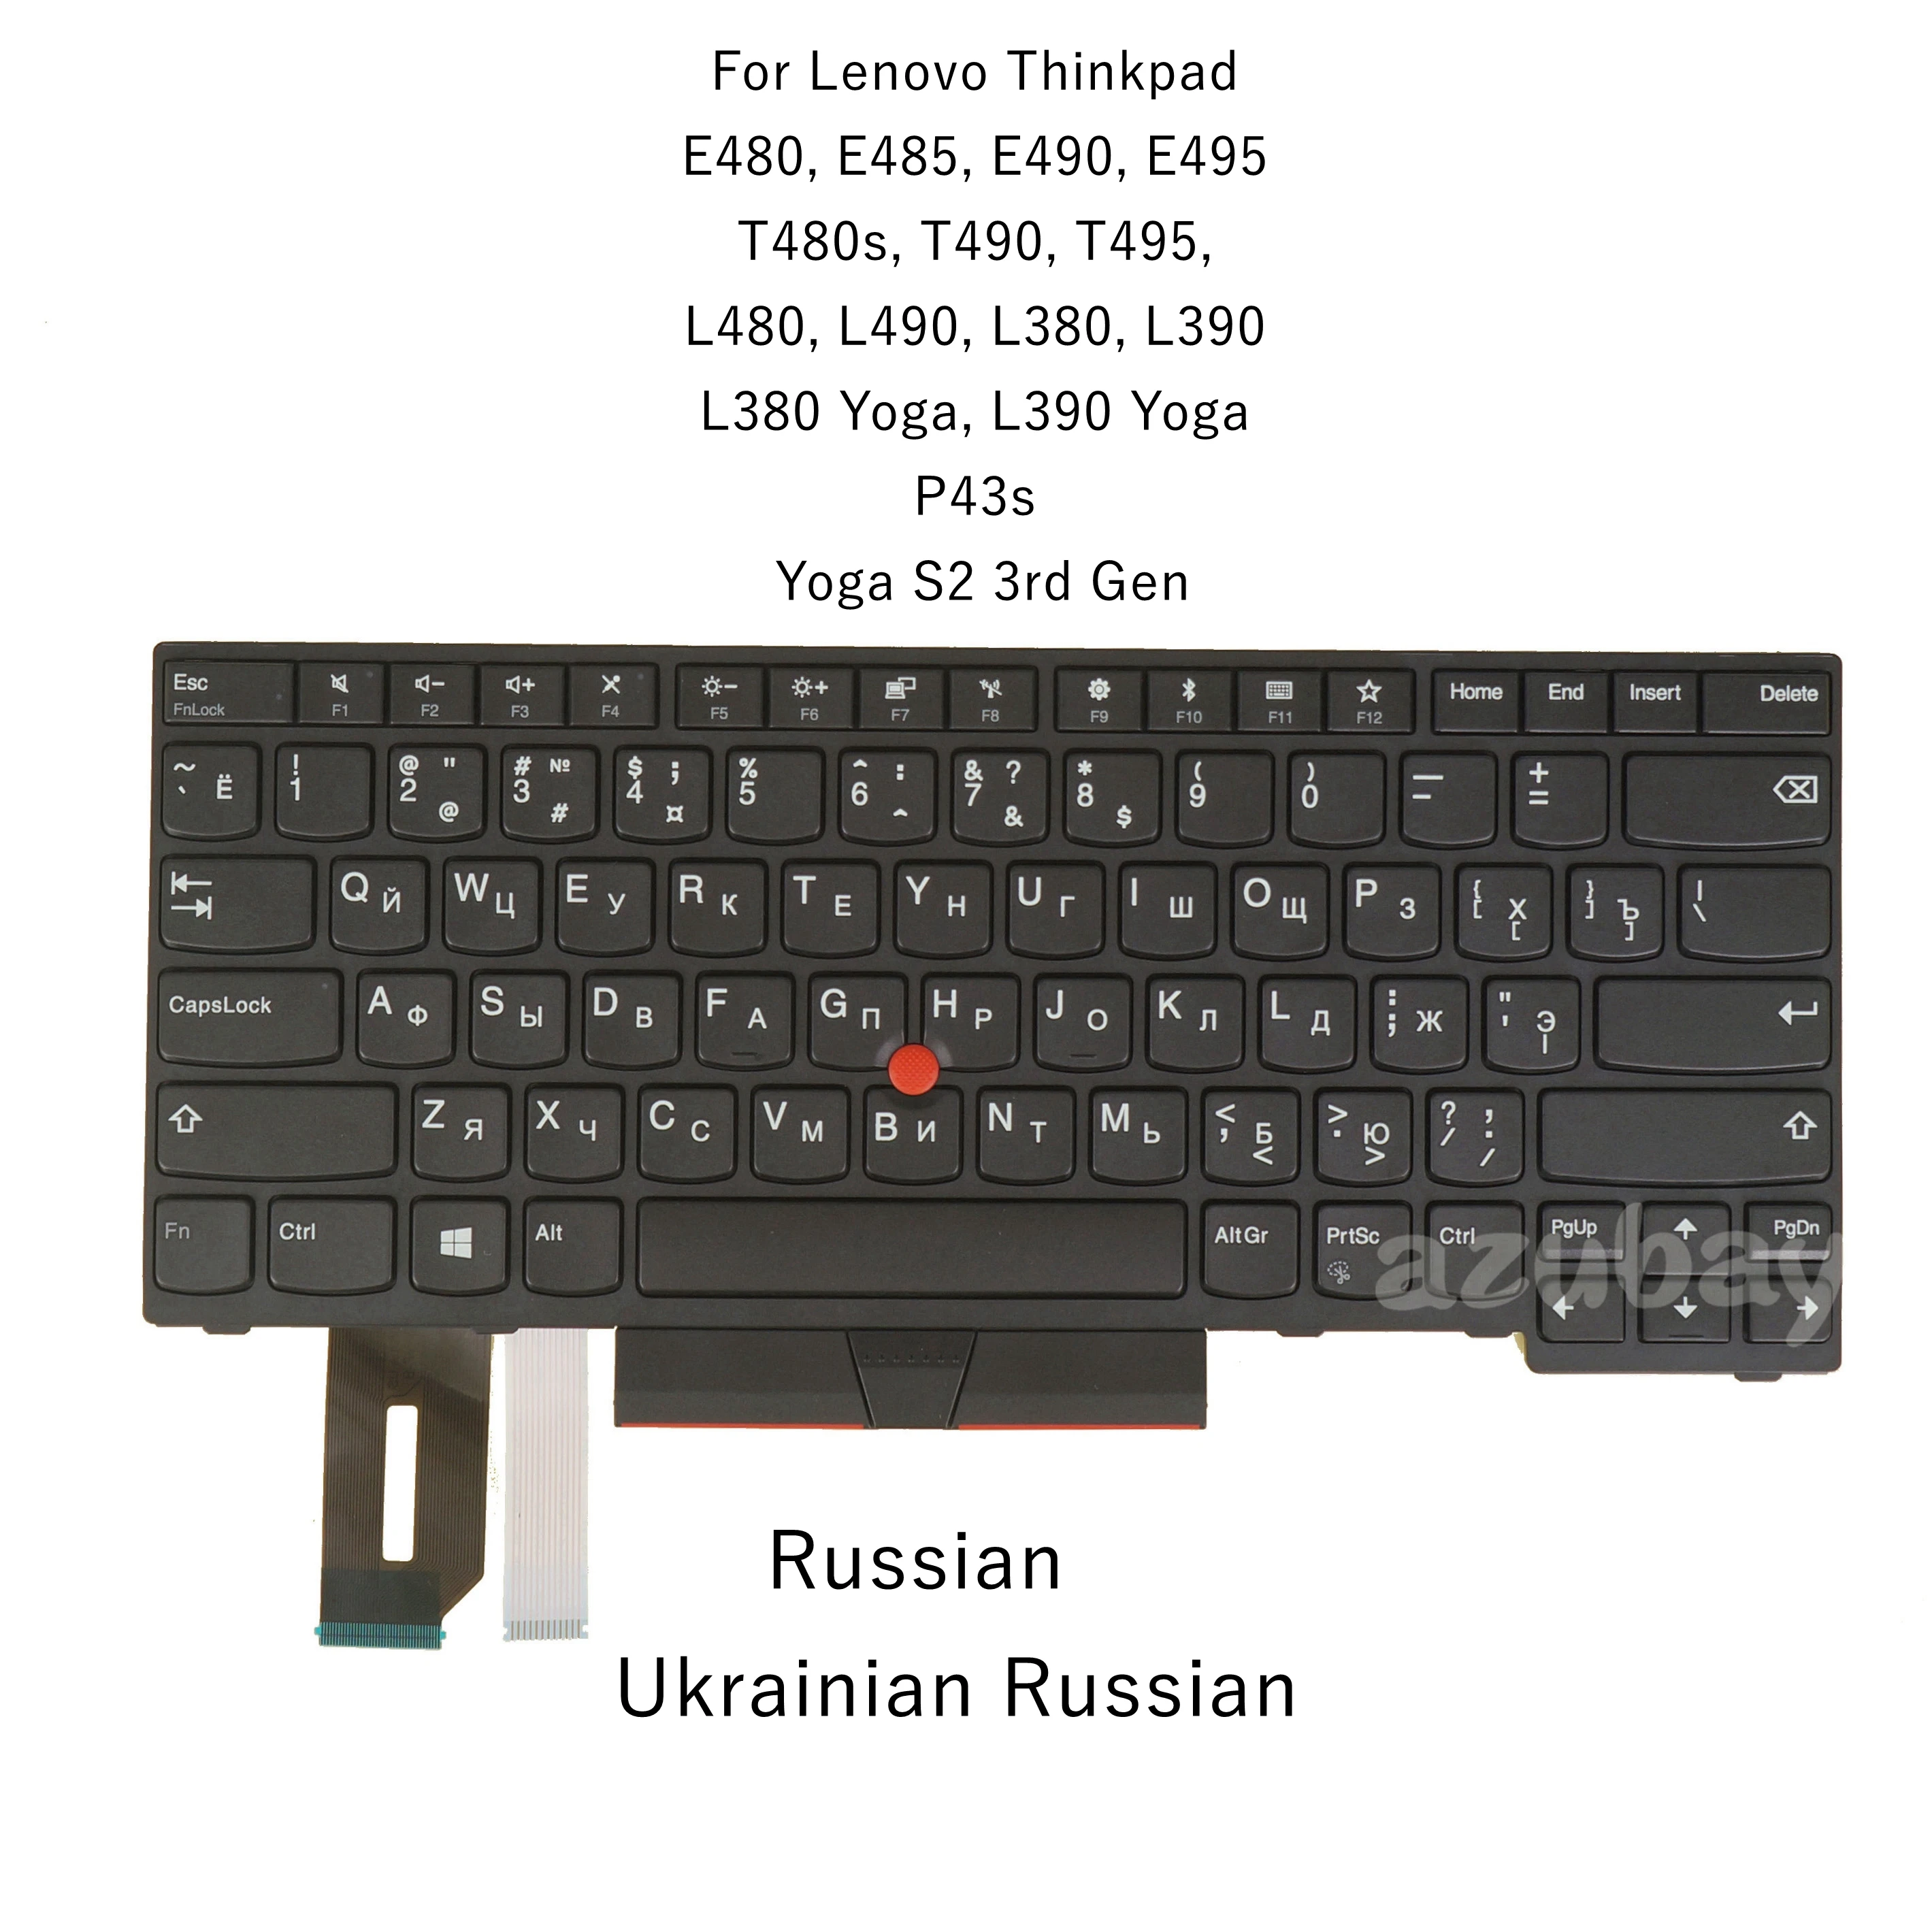 

Russian Keyboard For Lenovo Thinkpad E480 E485 E490 E495 T480s T490 T495 L480 L490 P43s L380 L390 /Yoga, Yoga S2 3rd Gen Backlit